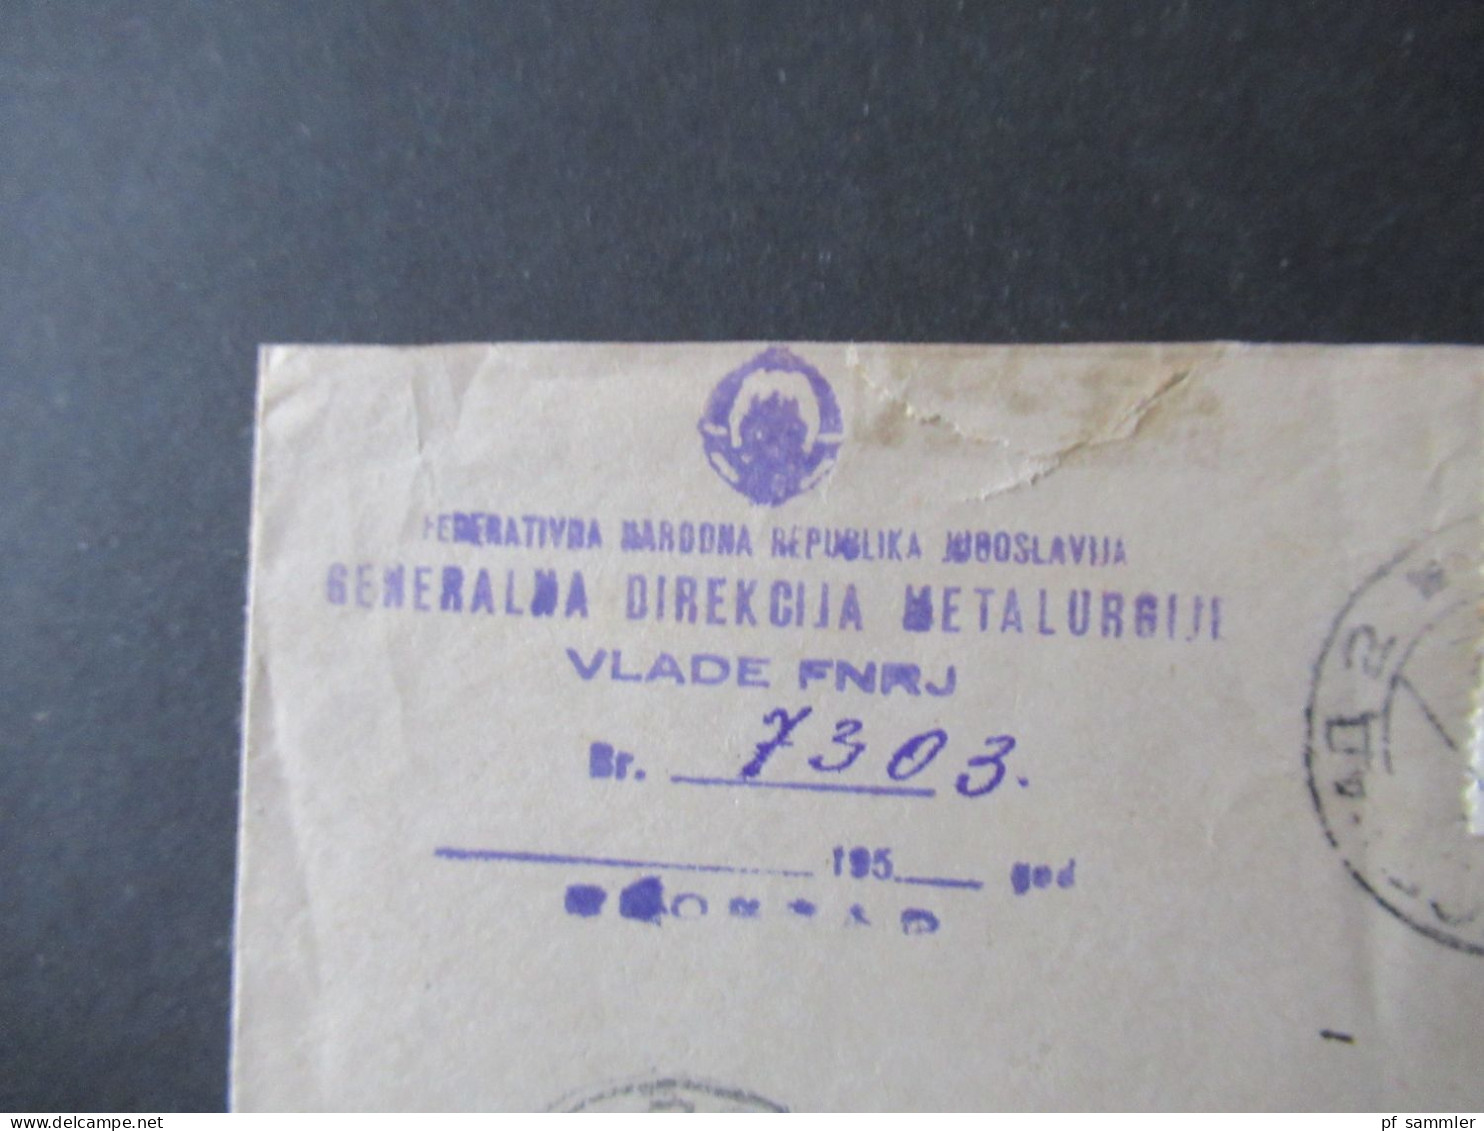 Jugoslawien 1950 Luftpost Geograd NY USA Marken Mit Aufdruck FNR / Generalna Direkcija Metalurgiji Vlade FNRJ - Covers & Documents